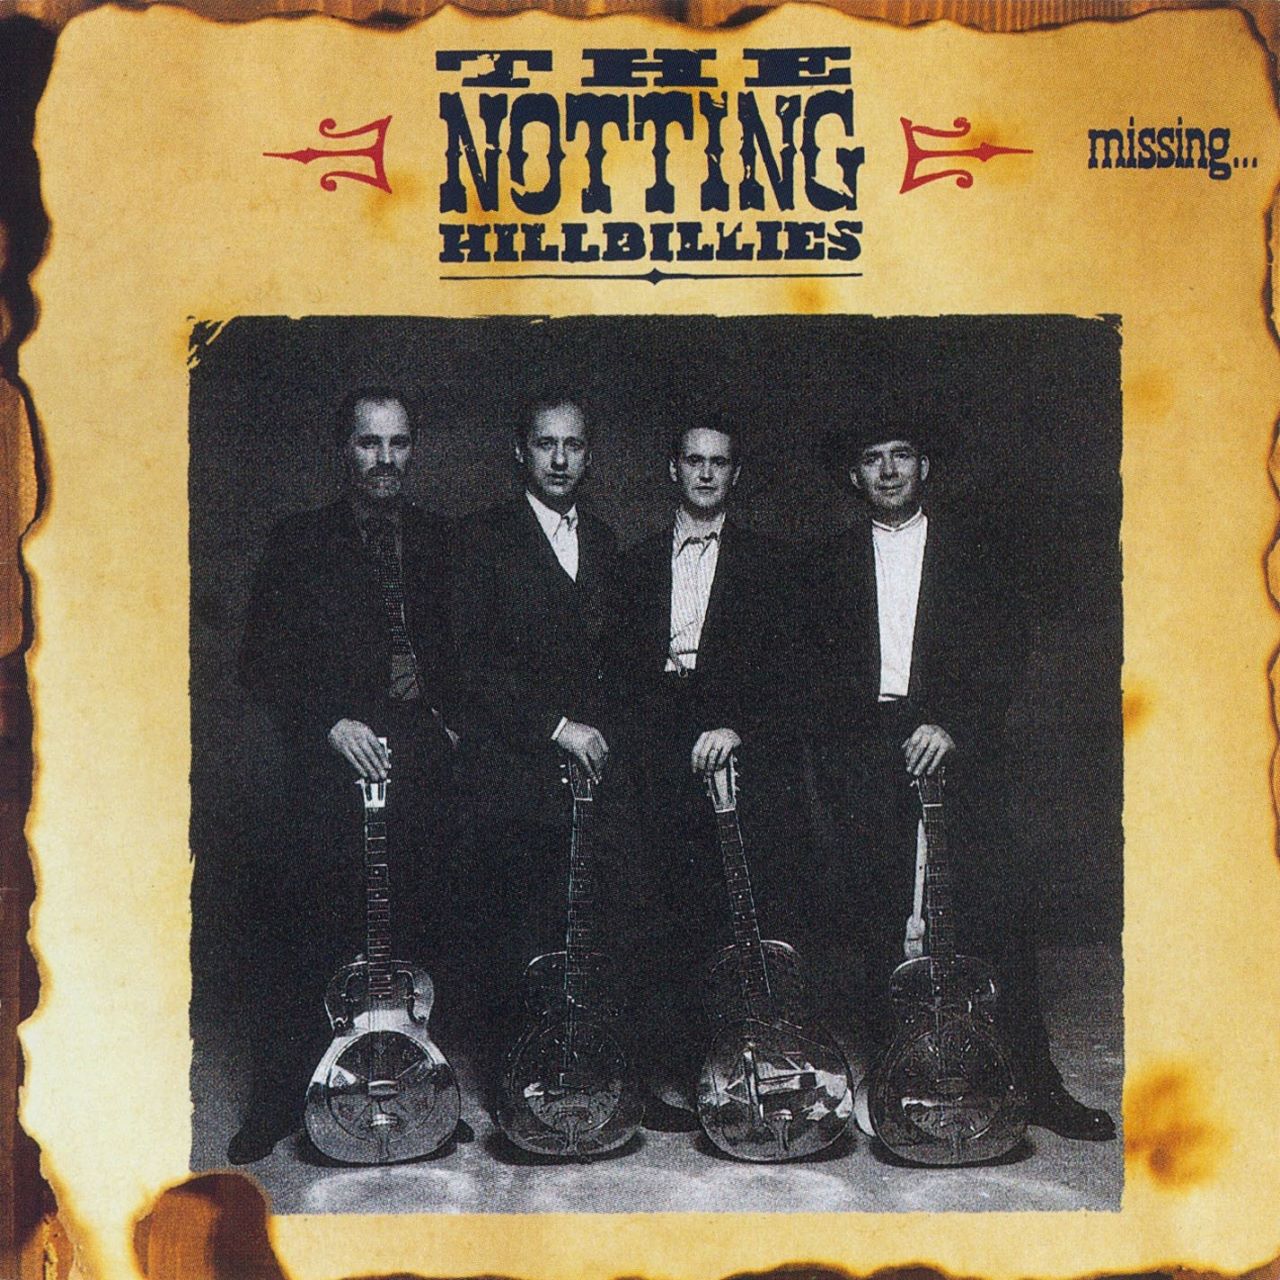 Notting Hillbillies - Missing .... Presumed Having A Good Time cover album